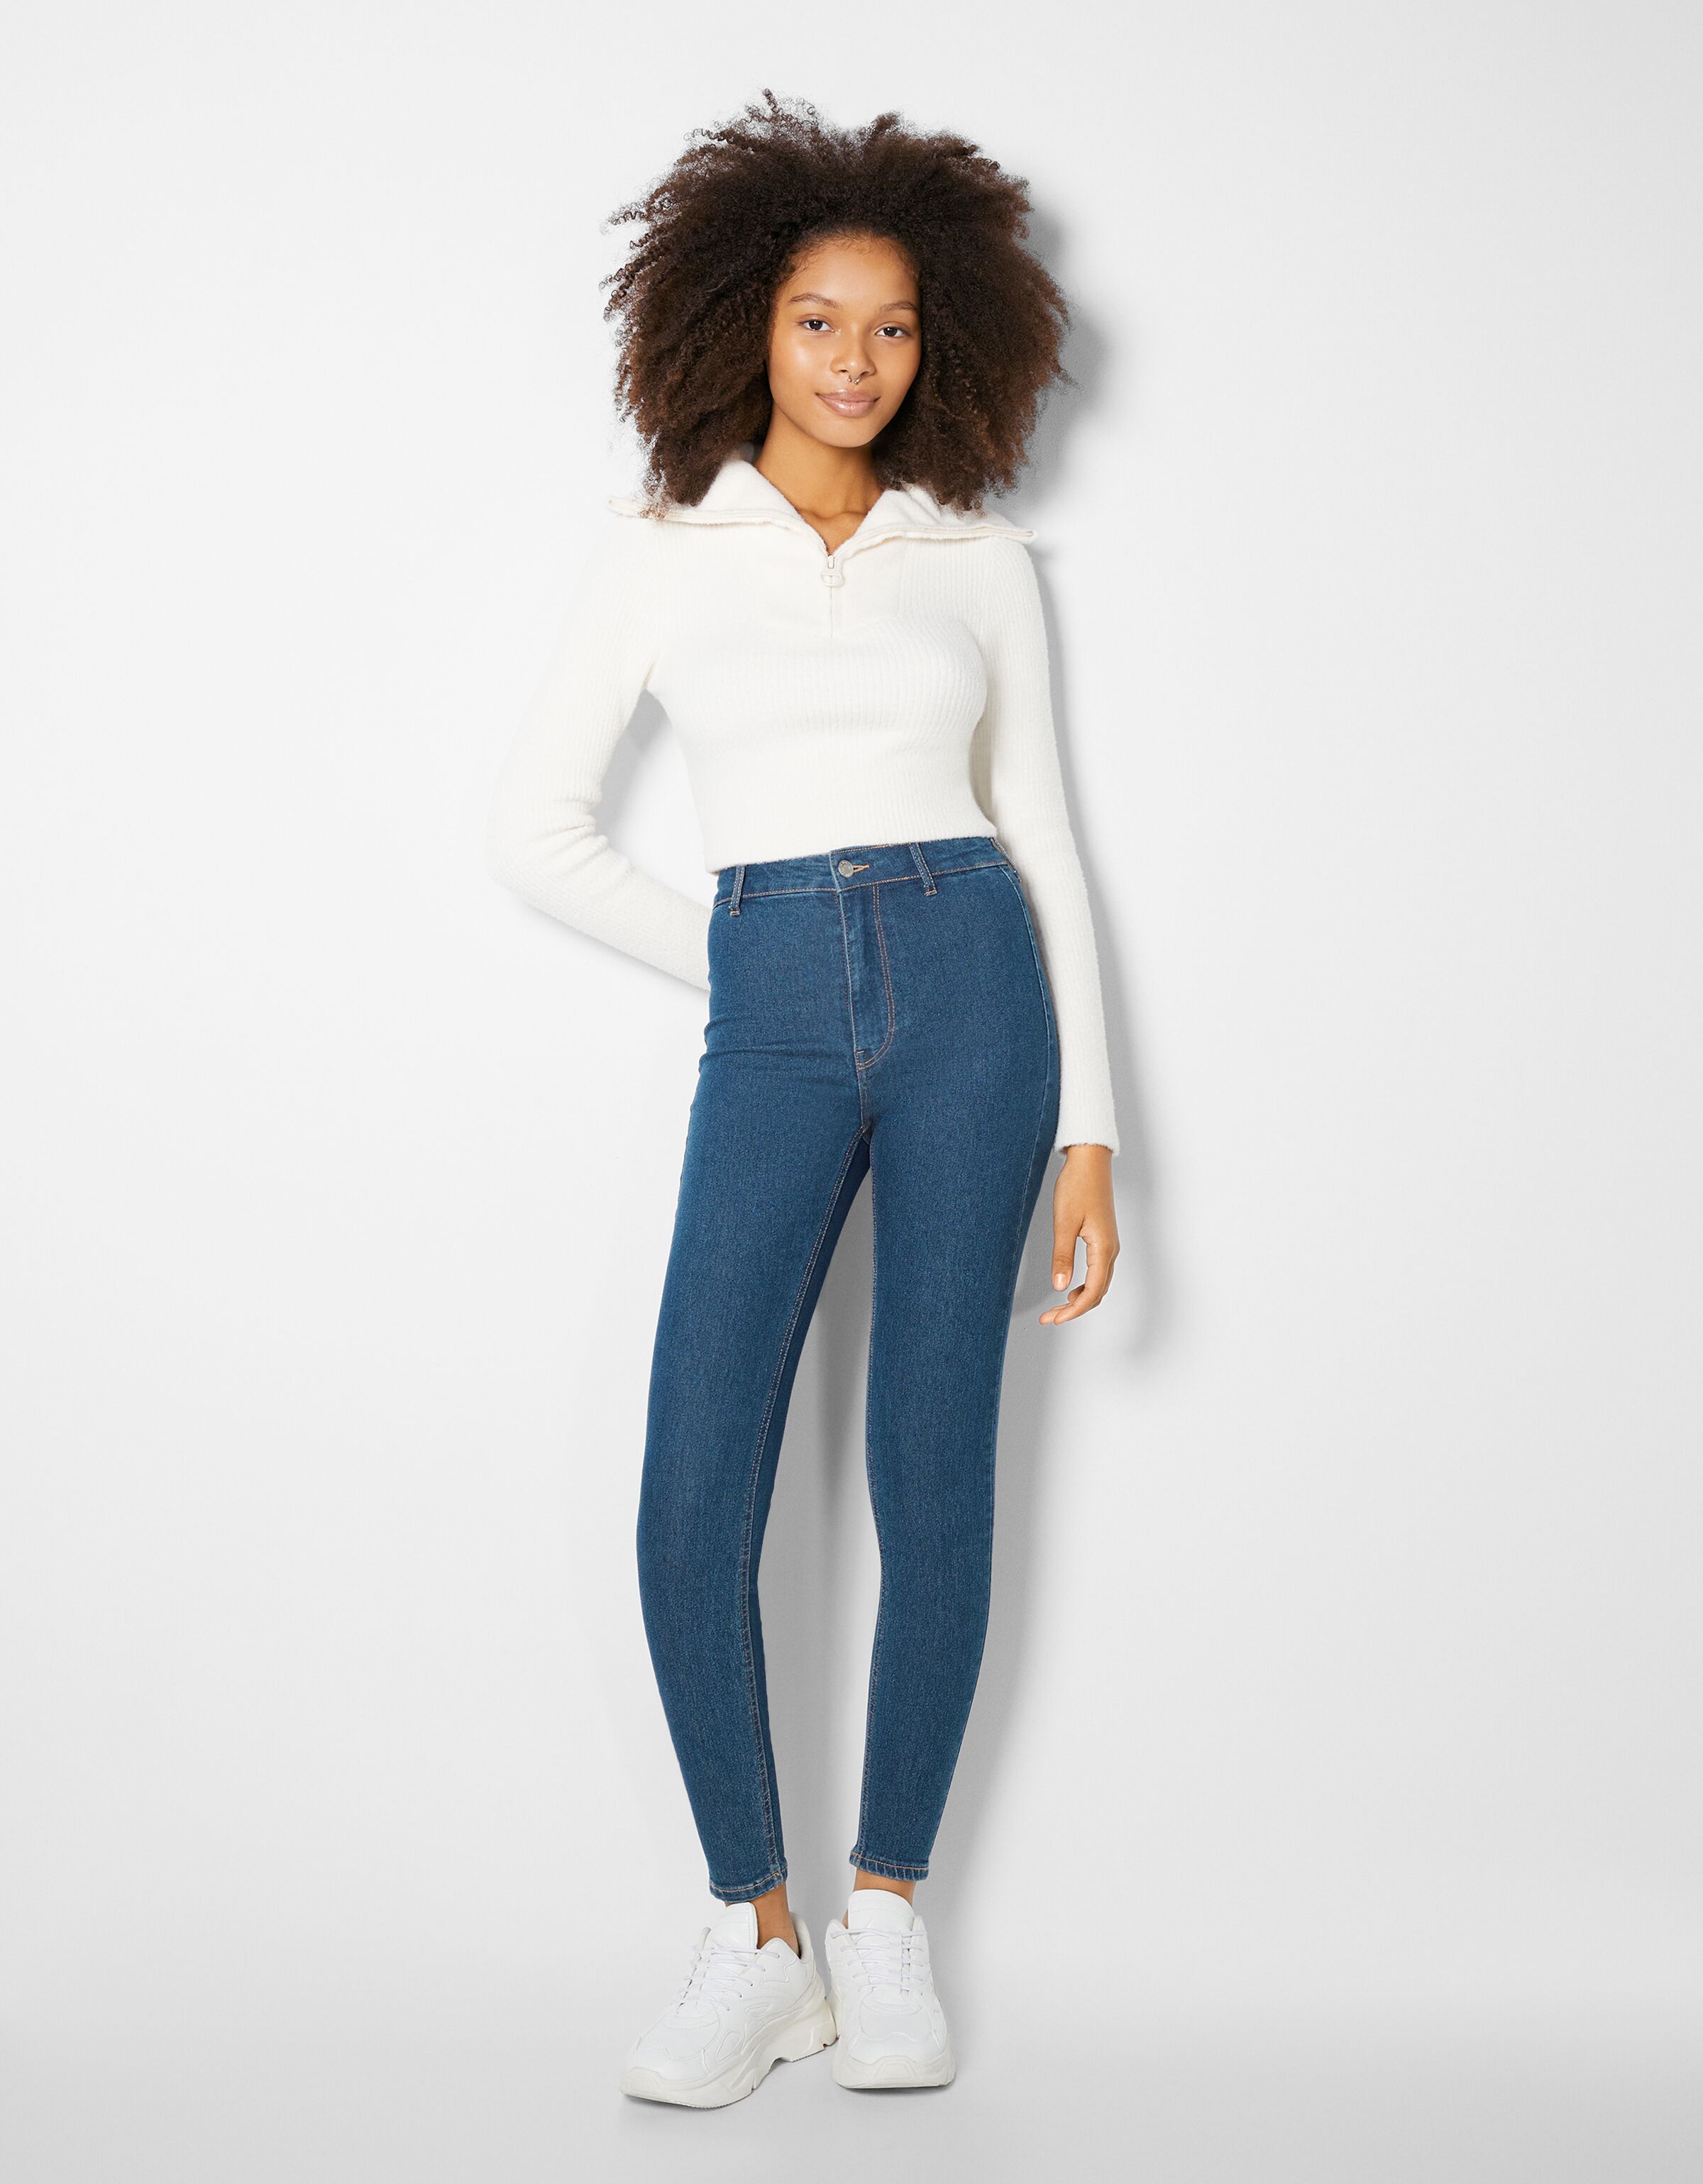 Multicolored 38                  EU discount 89% WOMEN FASHION Jeans Print Bershka Jeggings & Skinny & Slim 